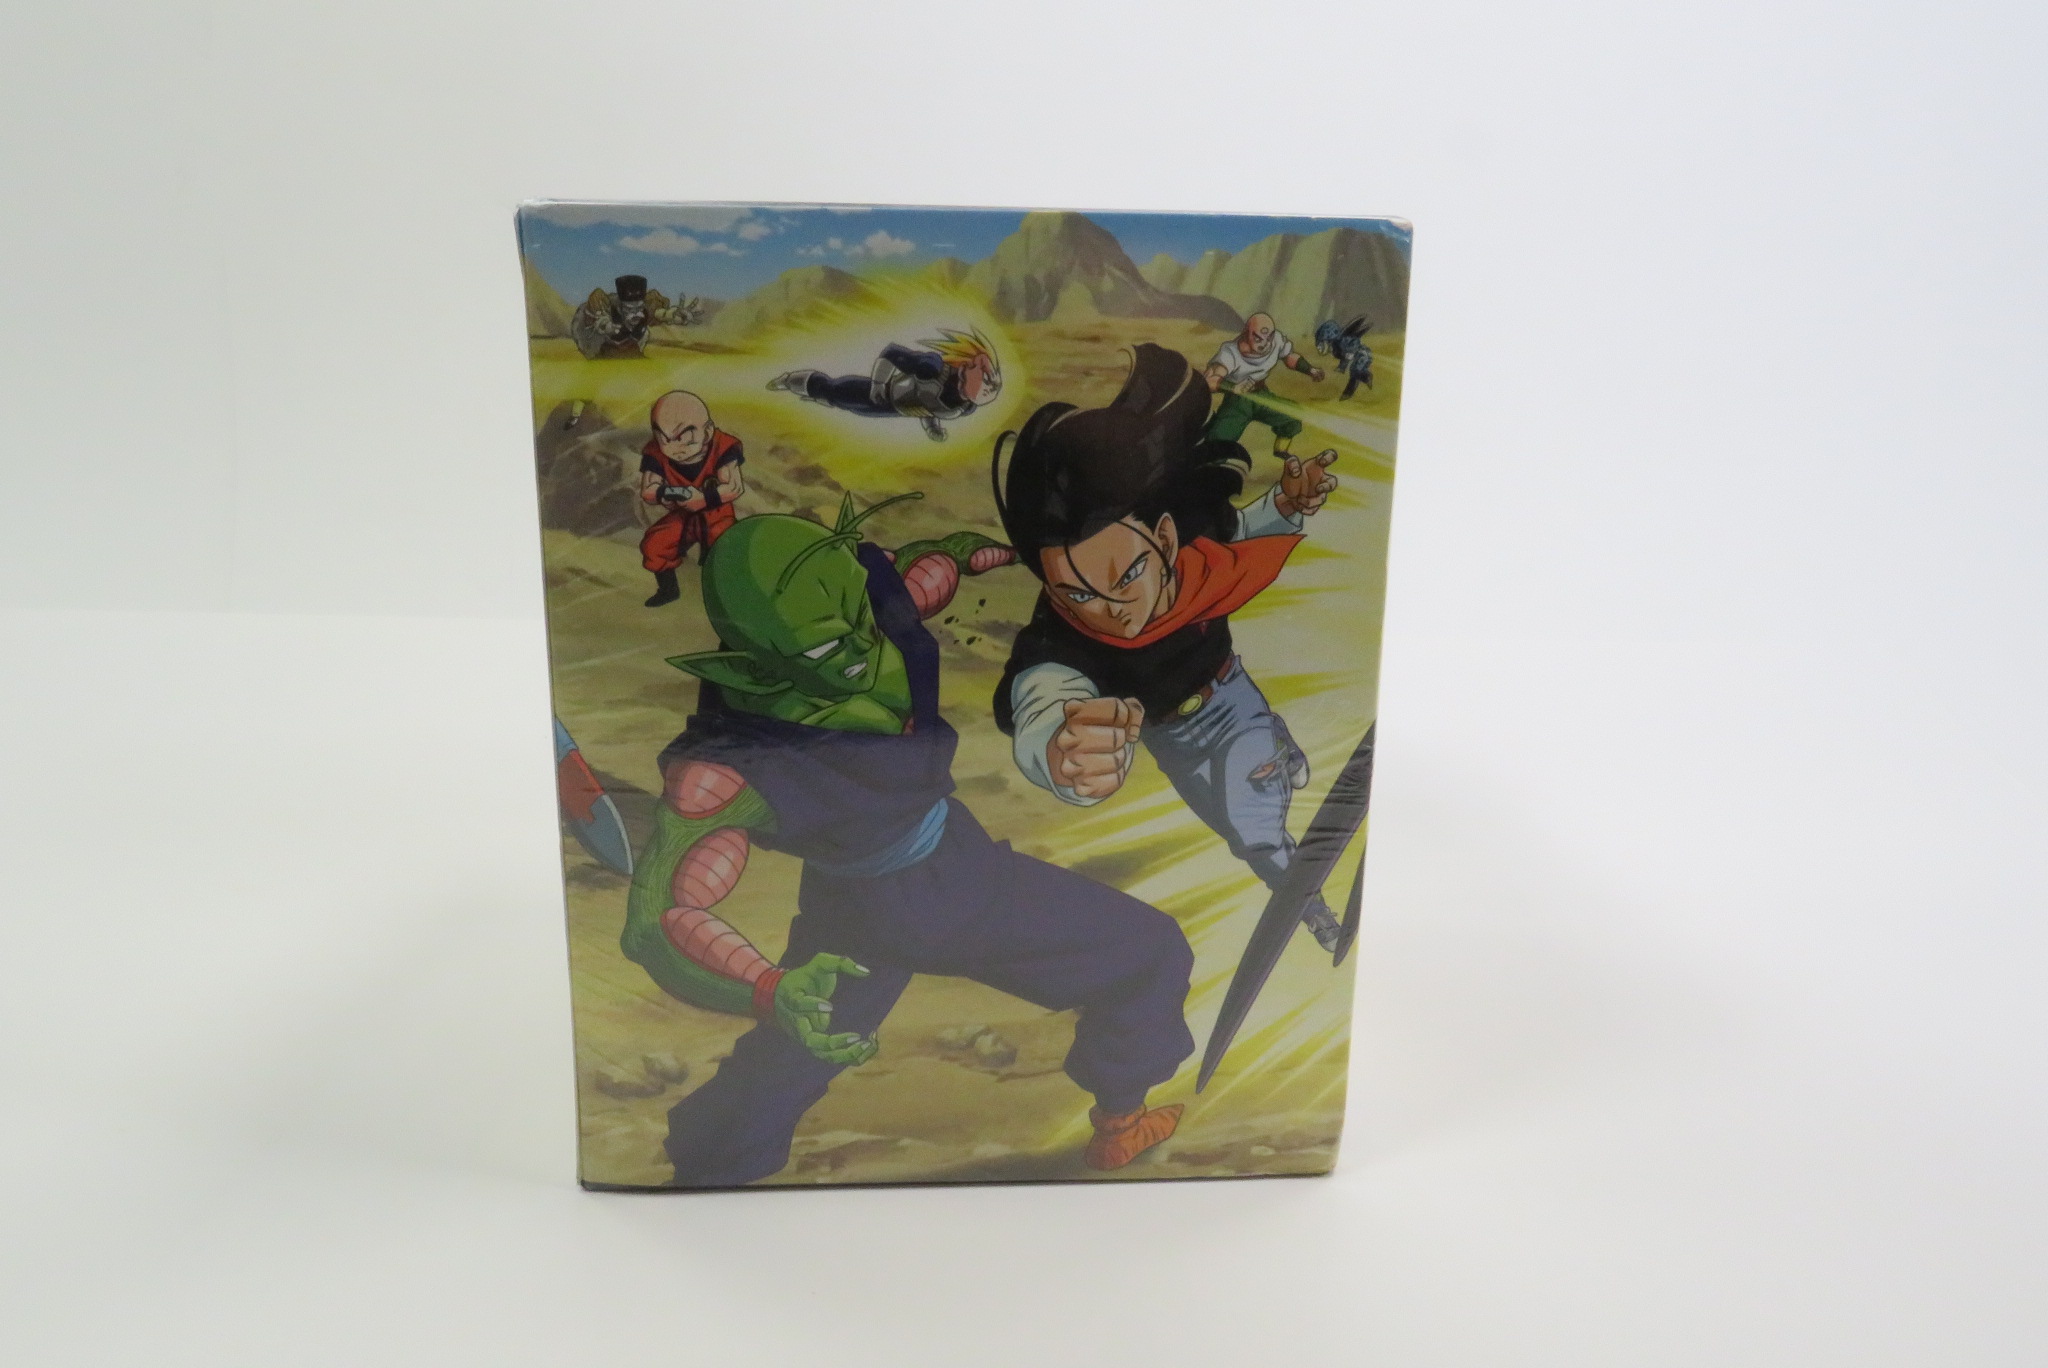 Dragonball Z Complete Seasons 1-9 Box sets (9 Box Sets)